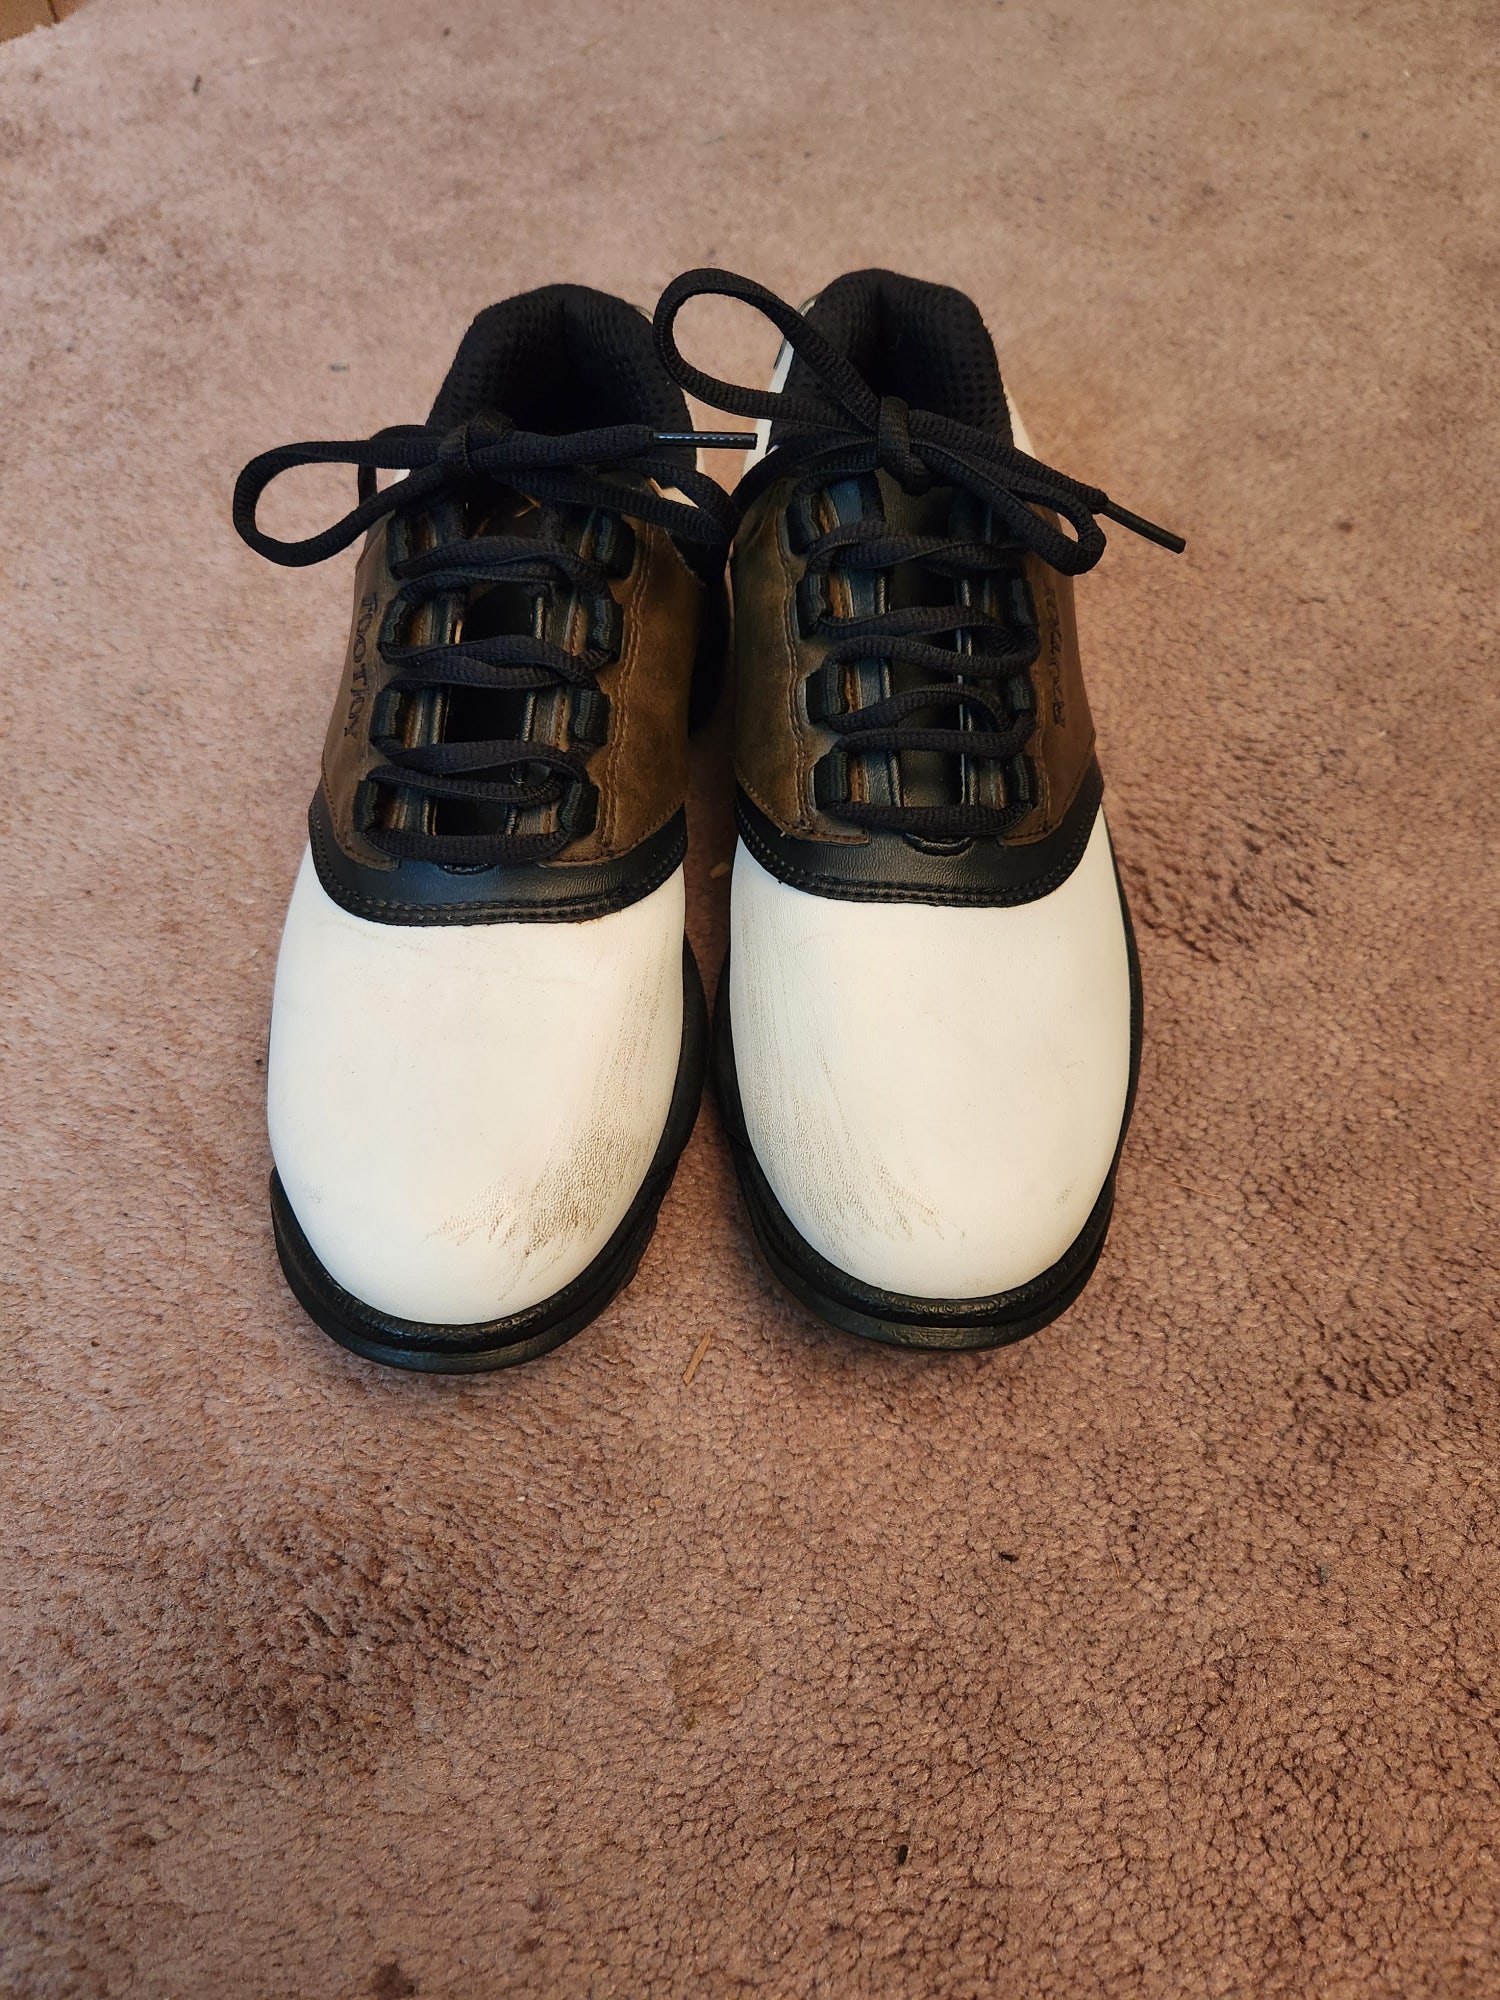 Used Size 7.5 (Women's 8.5) Footjoy GreenJoys Golf Shoes